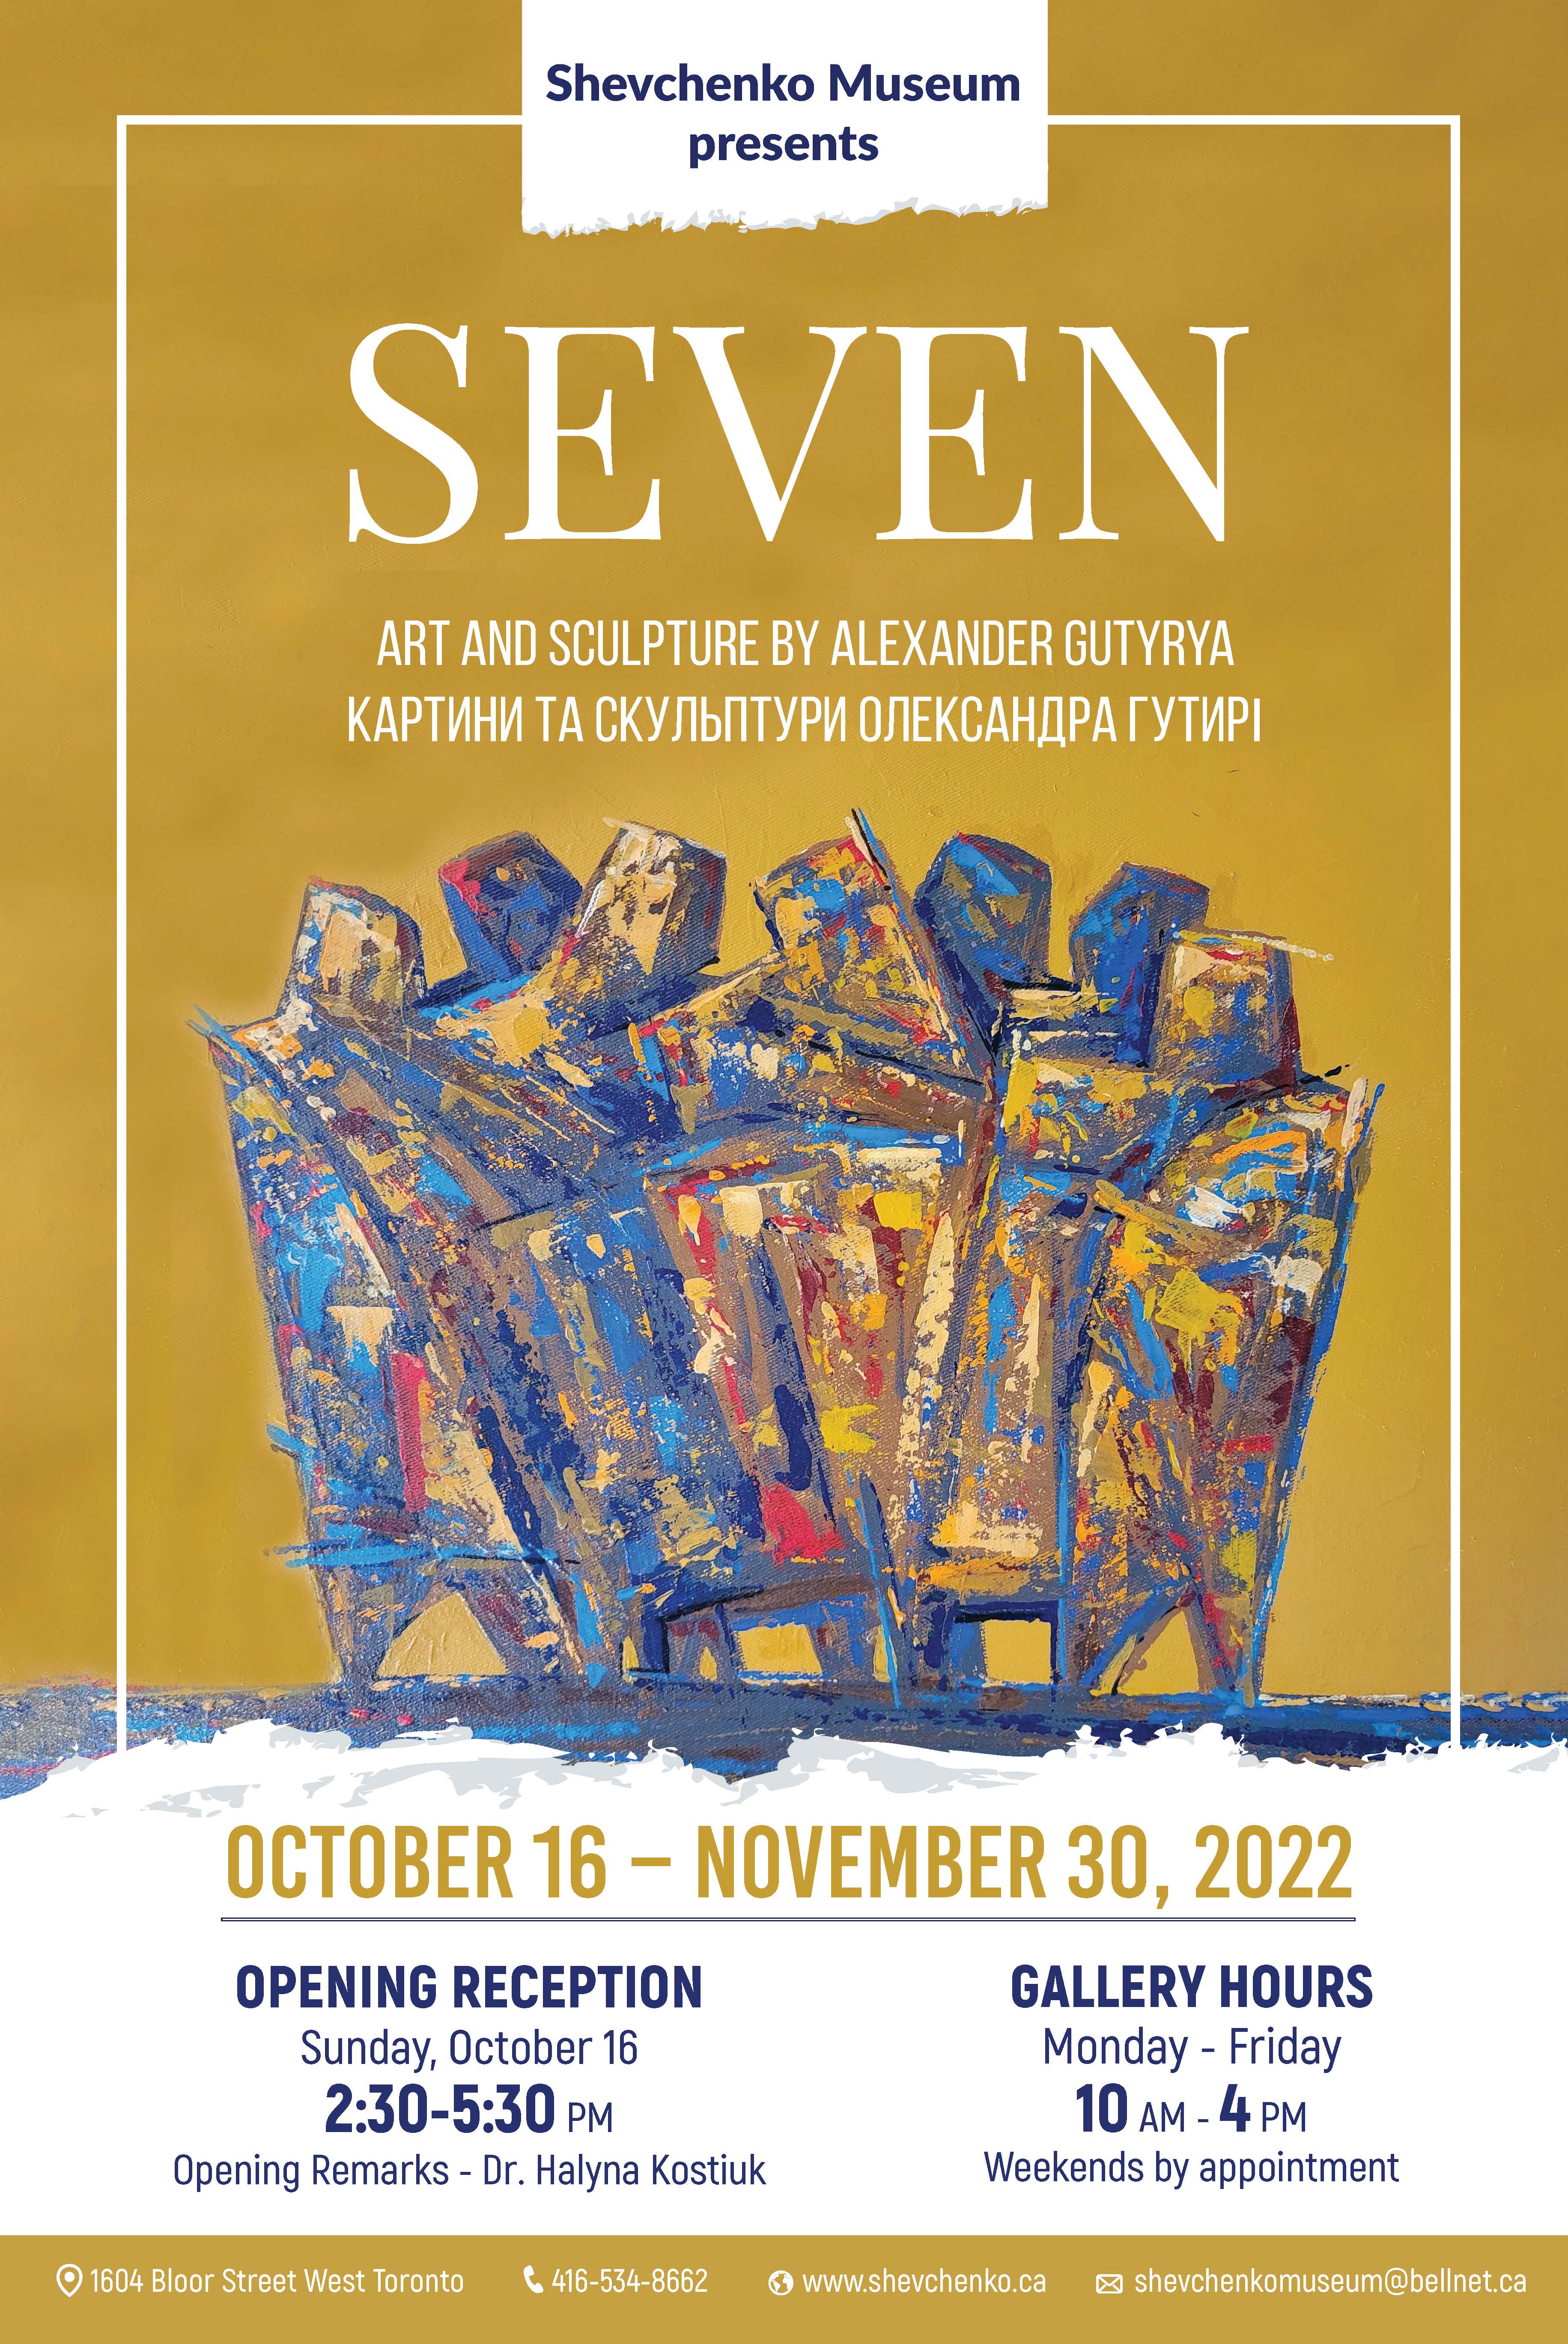 SEVEN - EXHIBITION OF ART AND SCULPTURE BY ALEXANDER GUTYRYA